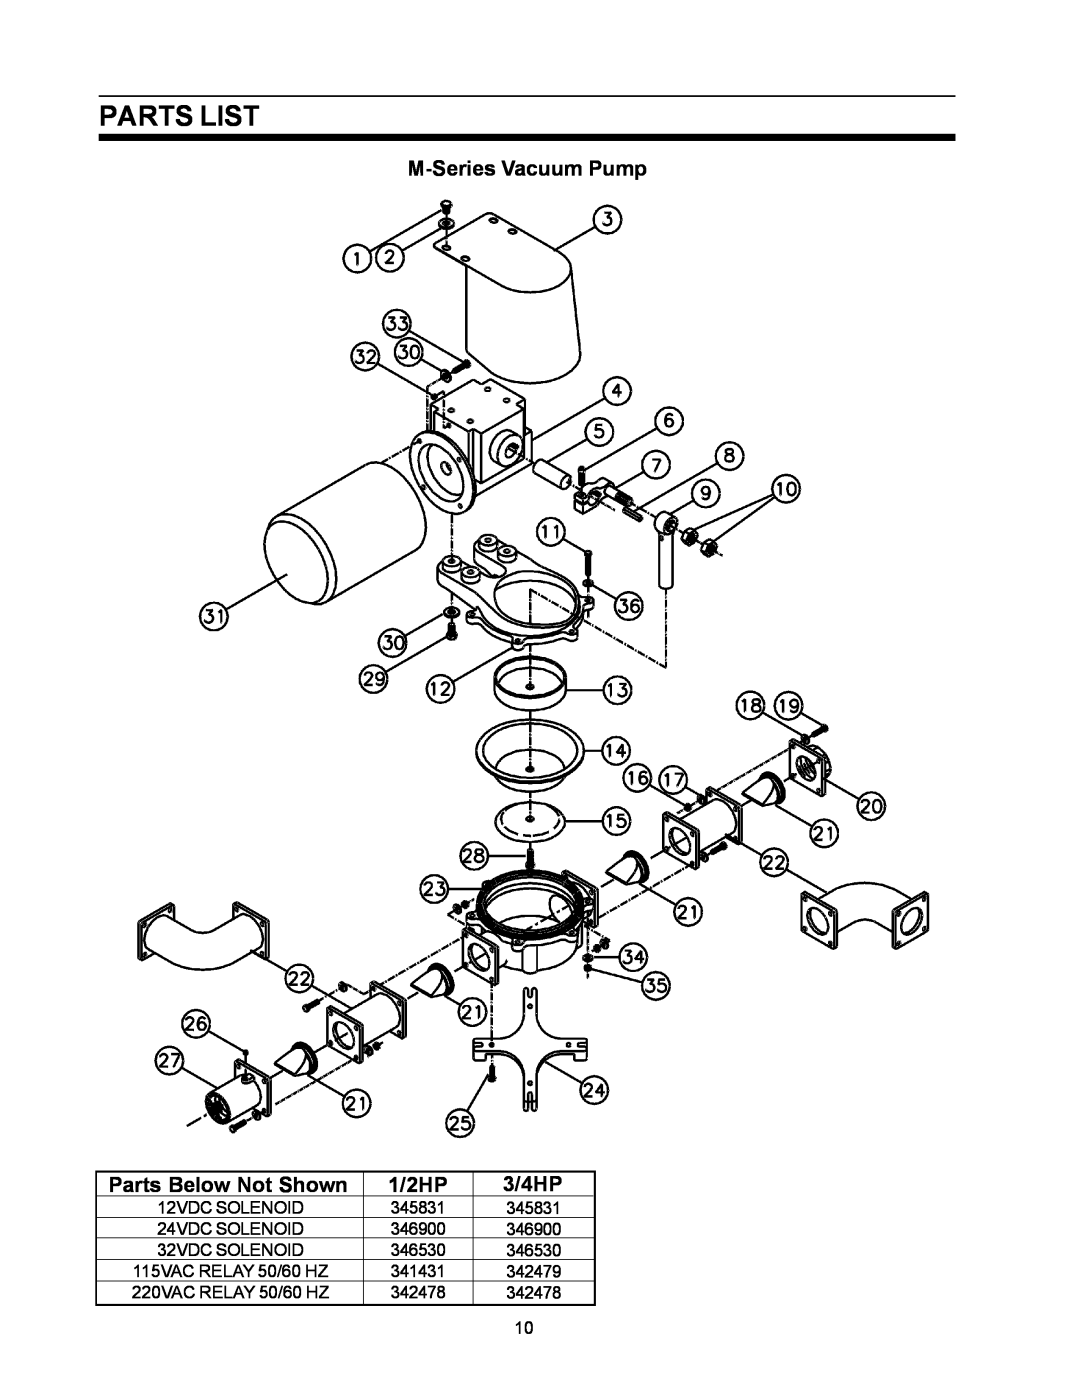 SeaLand owner manual M-SeriesVacuum Pump, Parts Below Not Shown, 1/2HP, 3/4HP, Parts List 